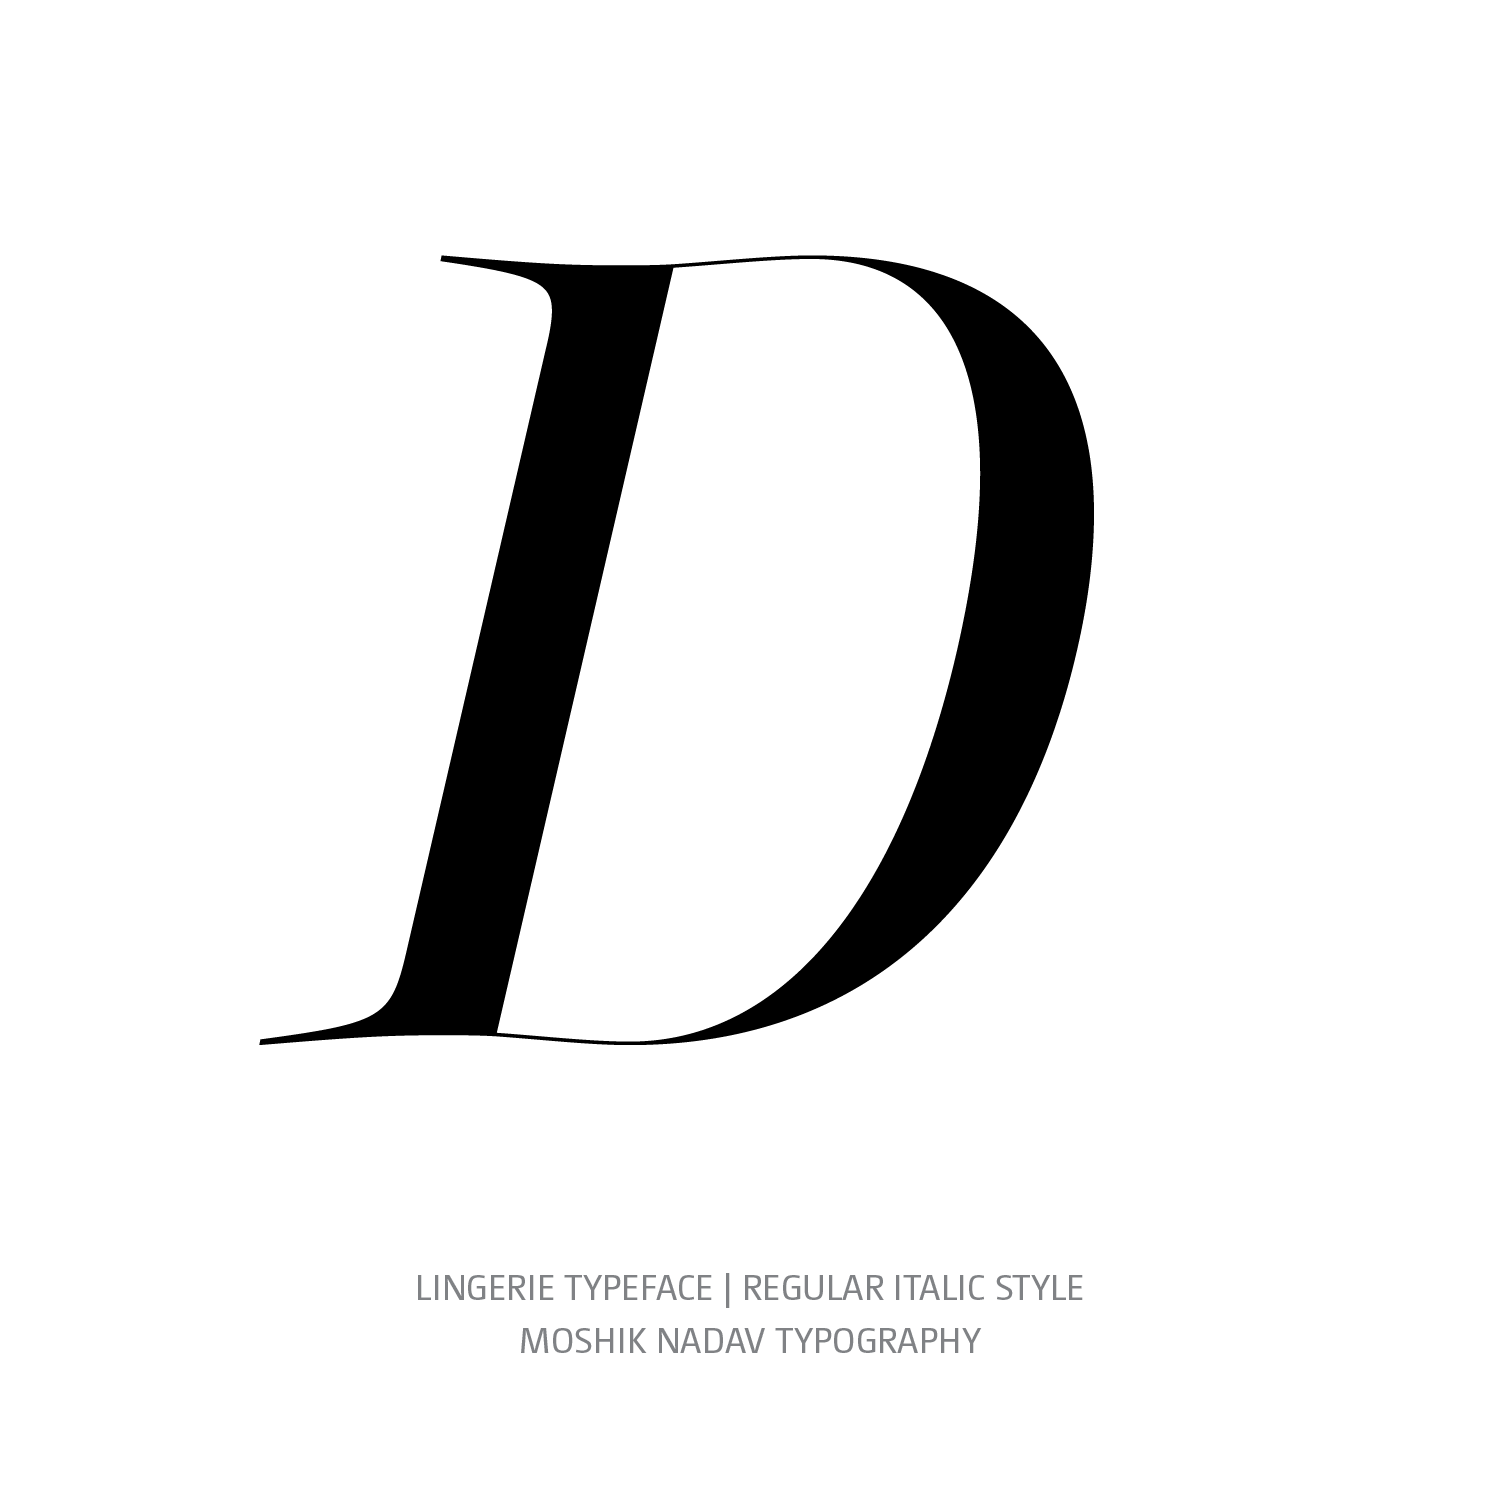 Lingerie Typeface Regular Italic D- Fashion fonts by Moshik Nadav Typography